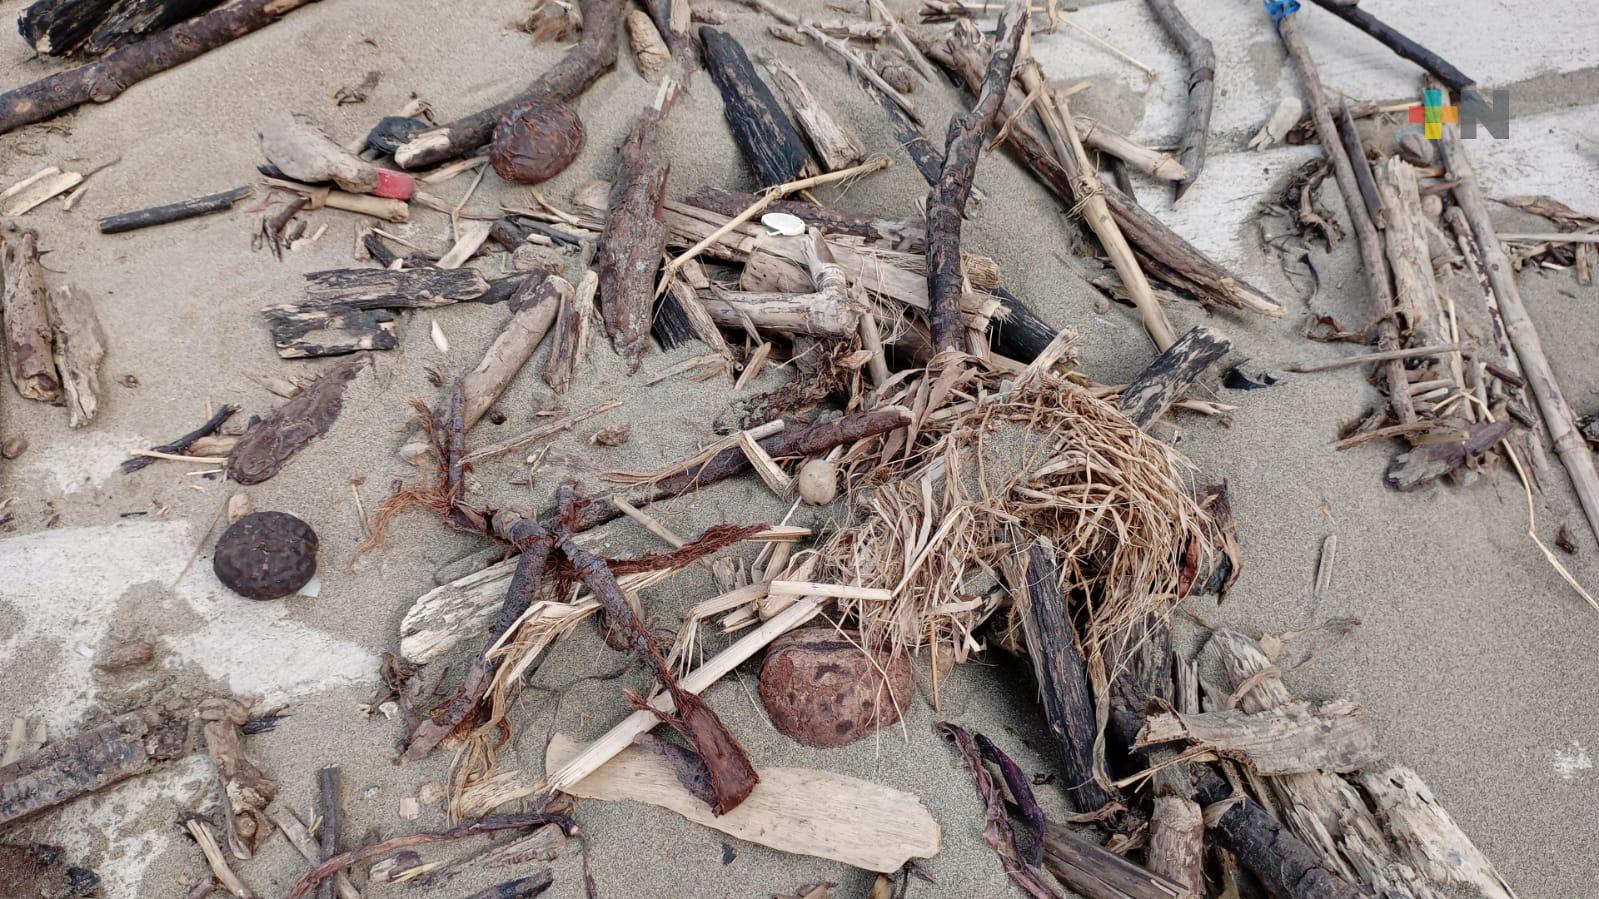 PC Coatzacoalcos alerta a población sobre fauna nociva en zona de playa